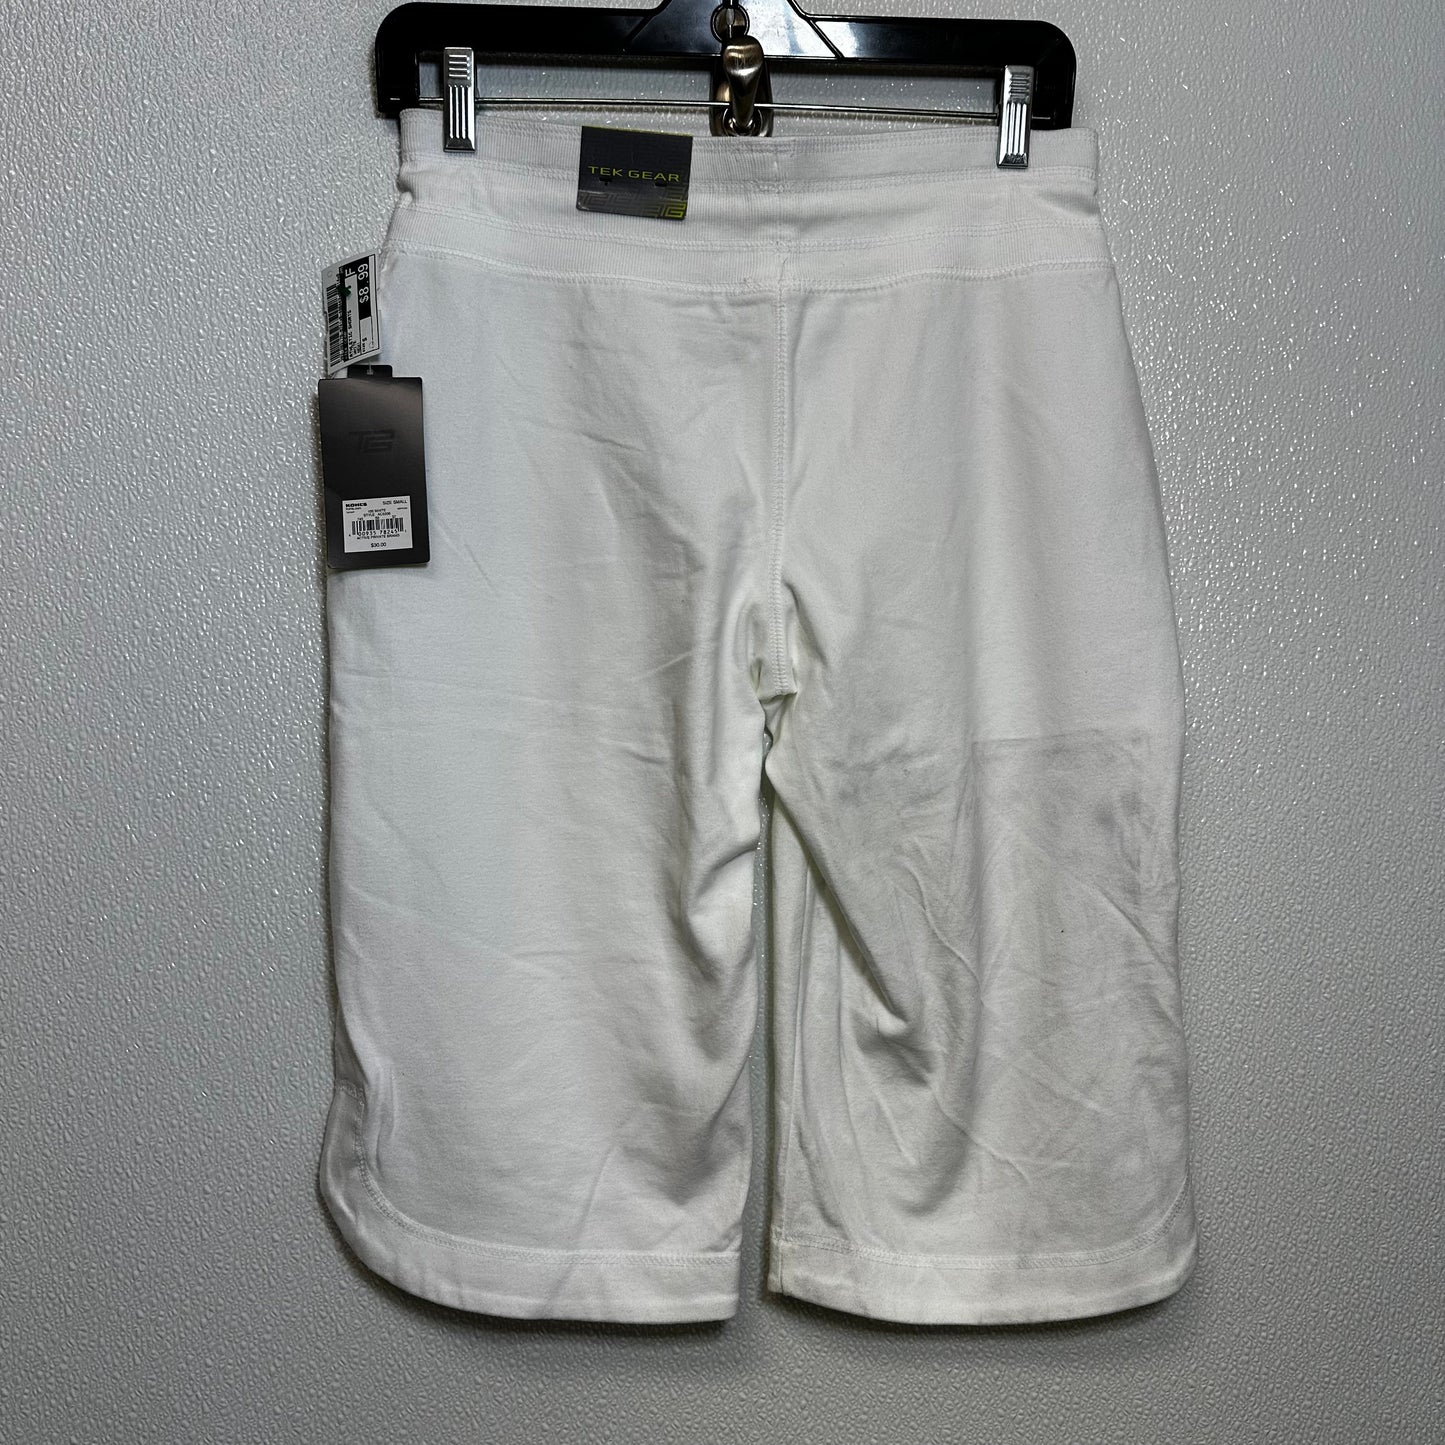 White Athletic Shorts Tek Gear, Size S